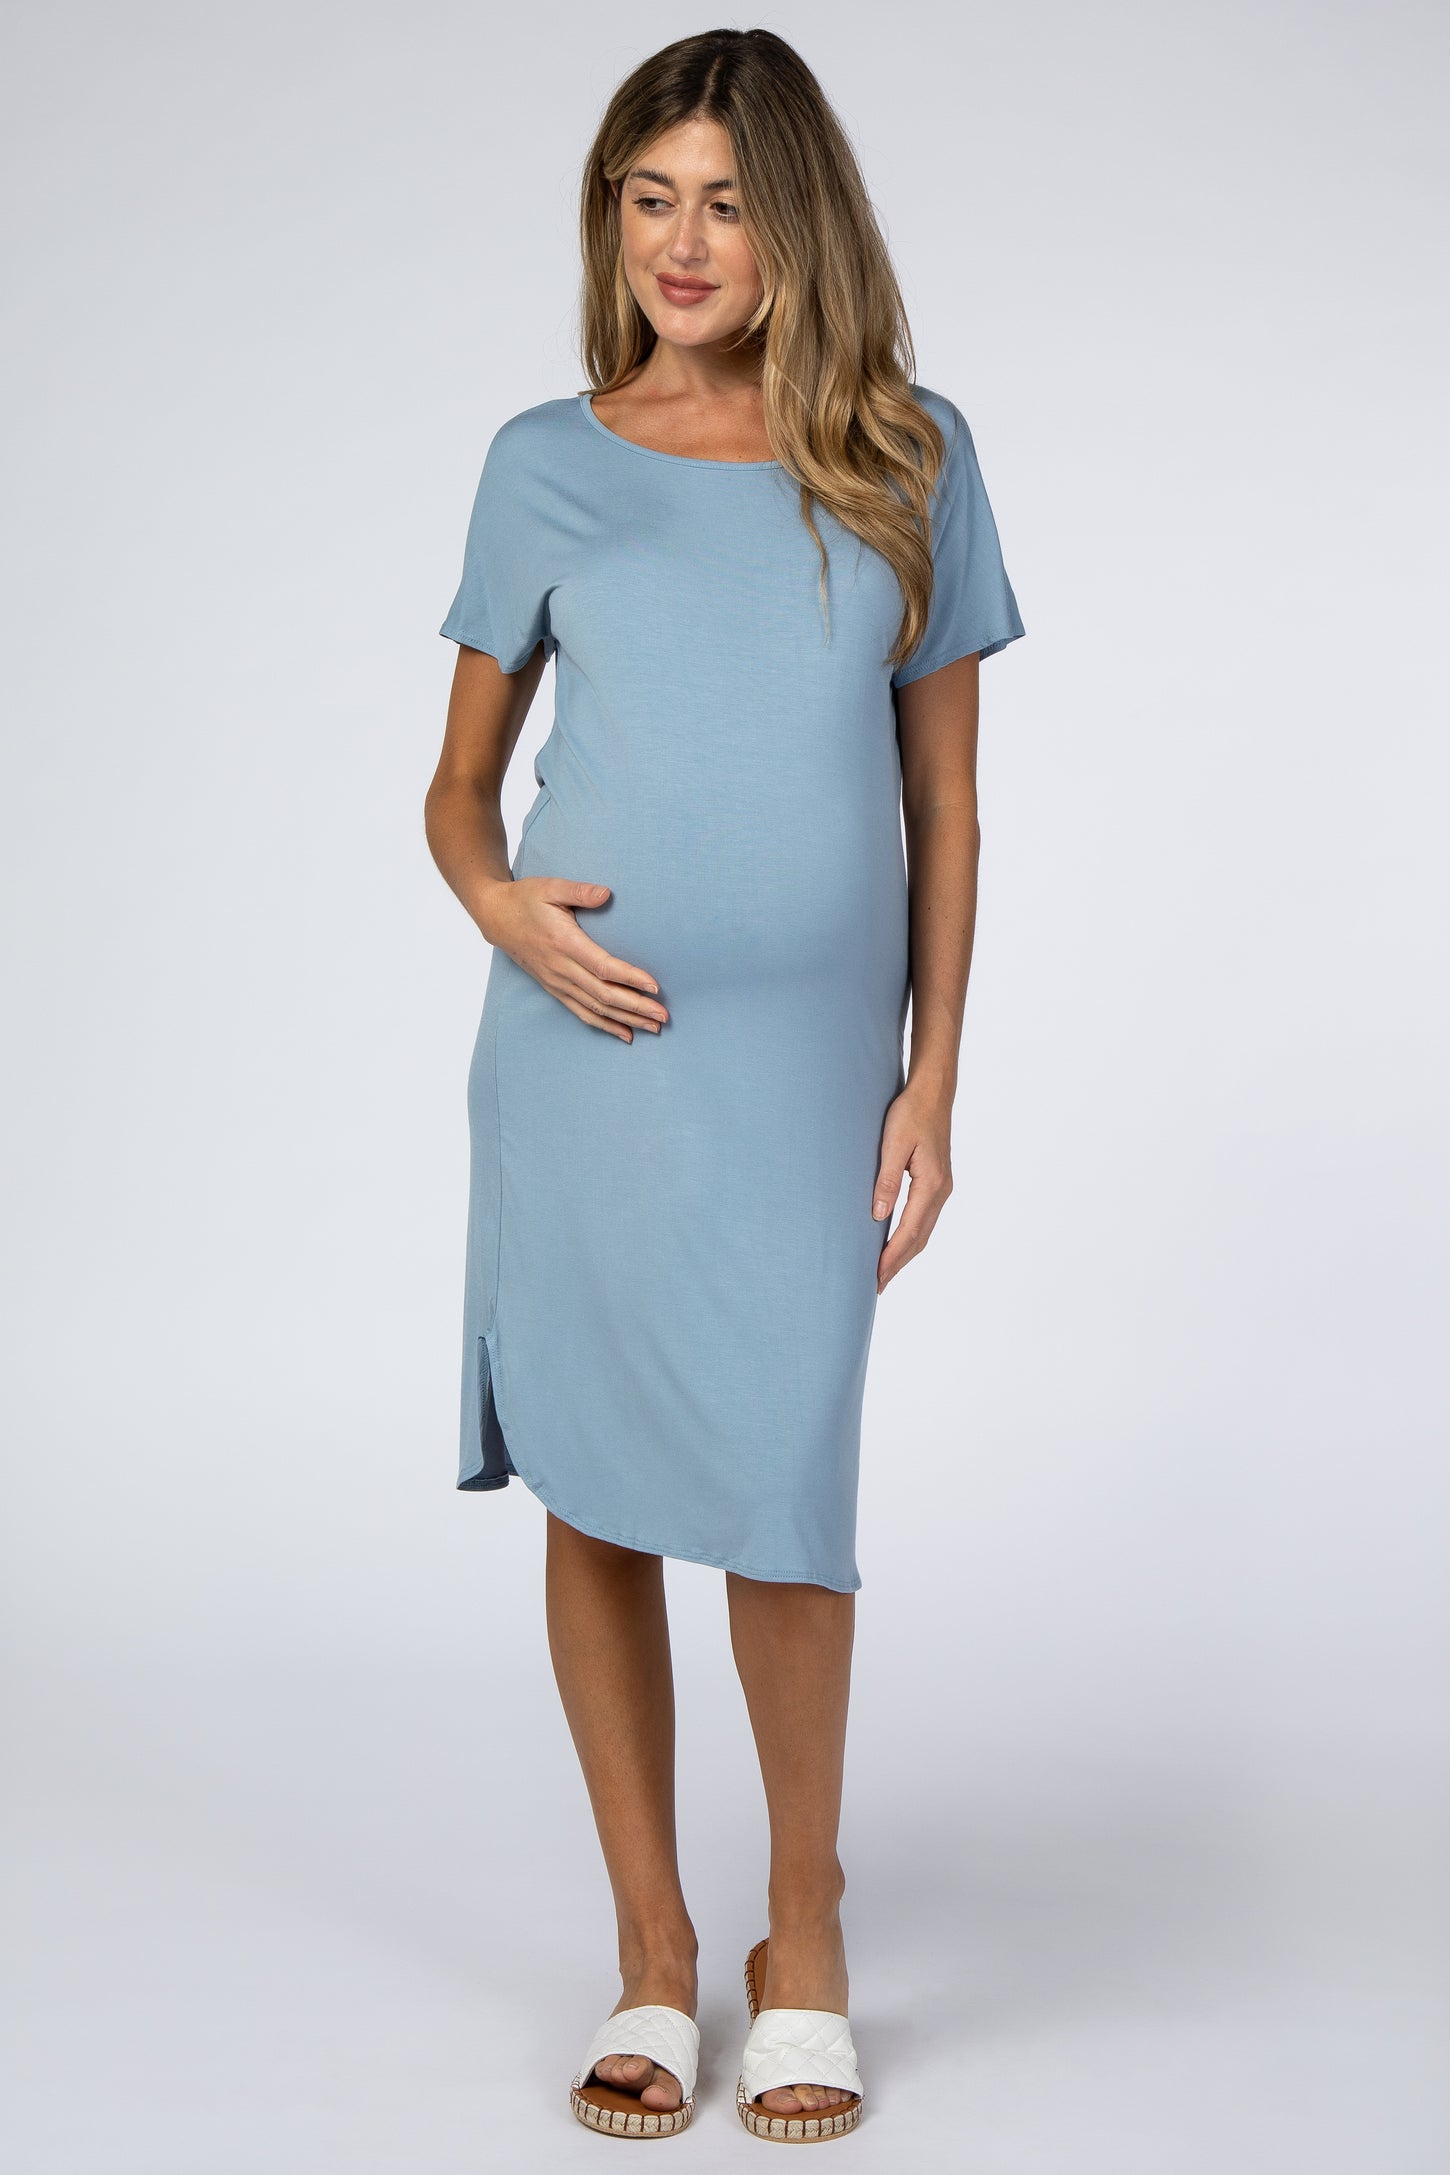 Blue Basic Maternity Dress